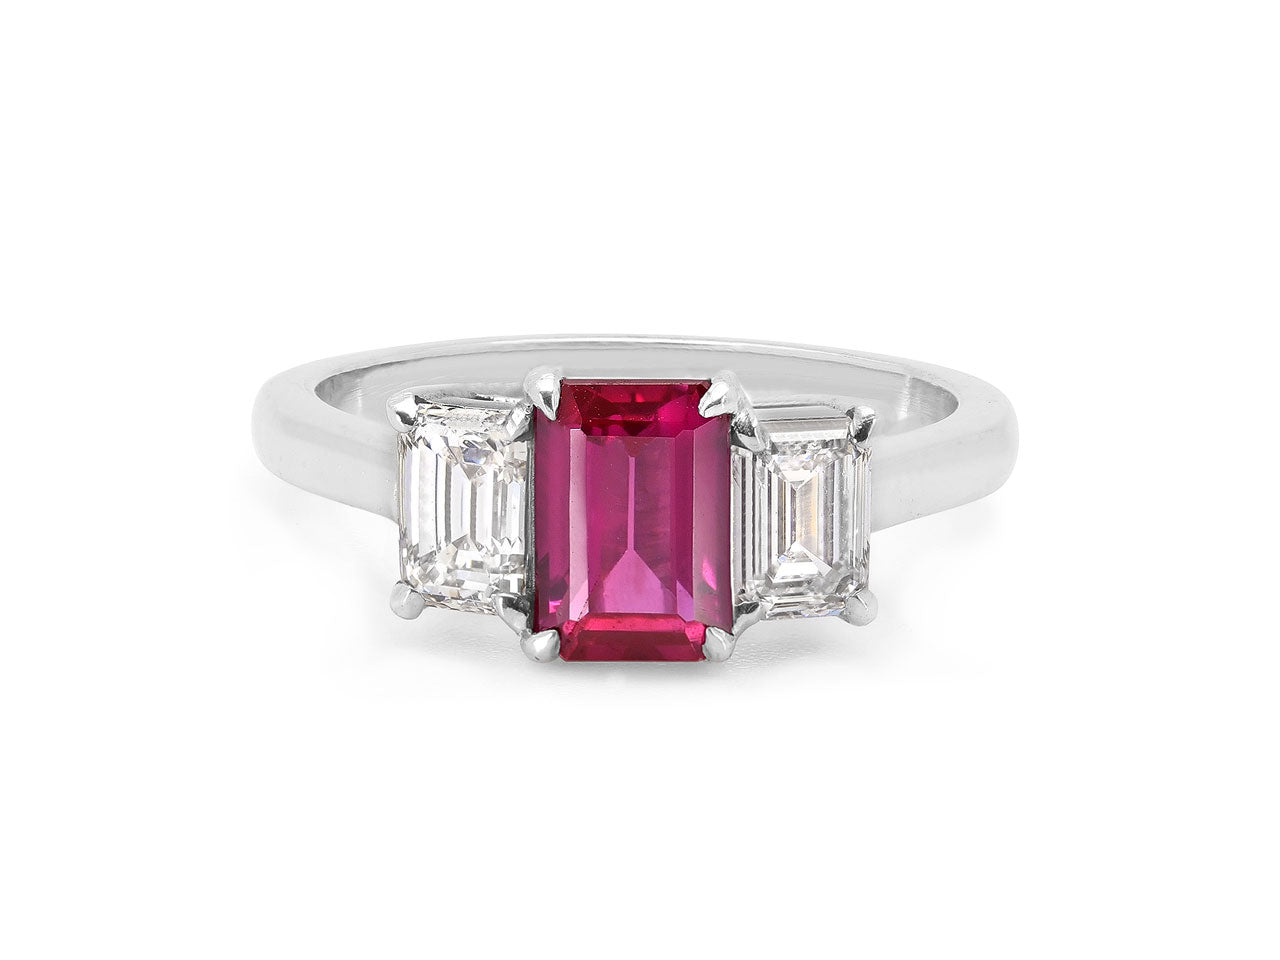 Beladora 'Bespoke' Three Stone Burma Ruby and Diamond Ring in Platinum